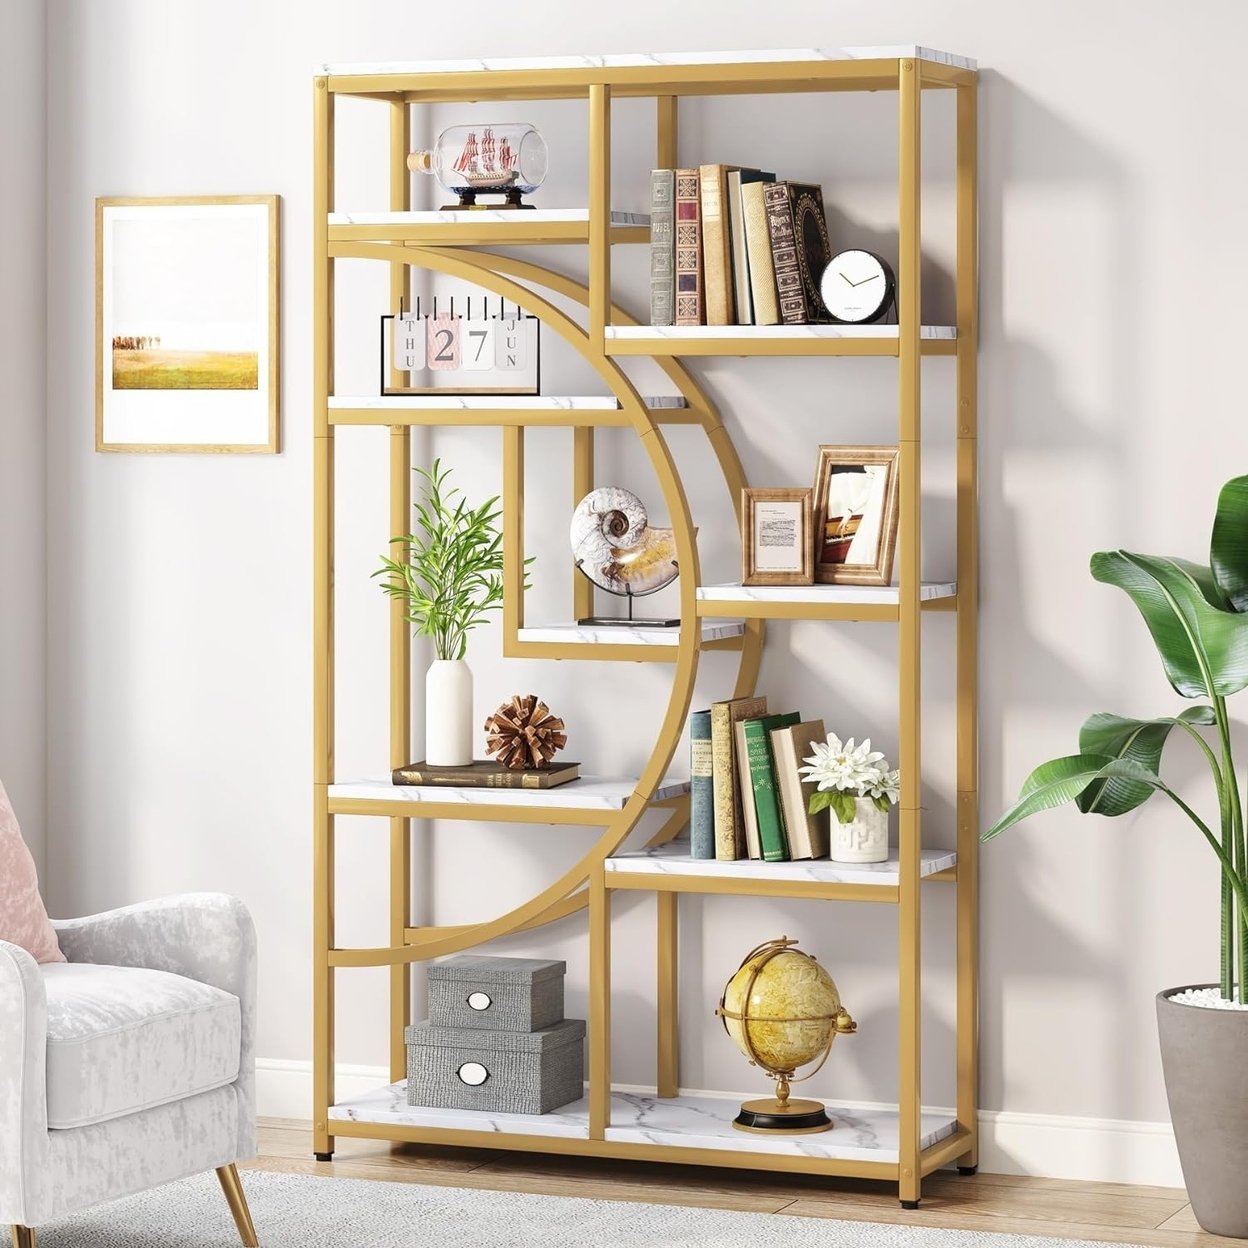 Industrial 5 Tier Etagere Bookcase, Freestanding Tall Bookshelves Display Shelf Storage Organizer With 9-Open Storage Shelf - White Marbling